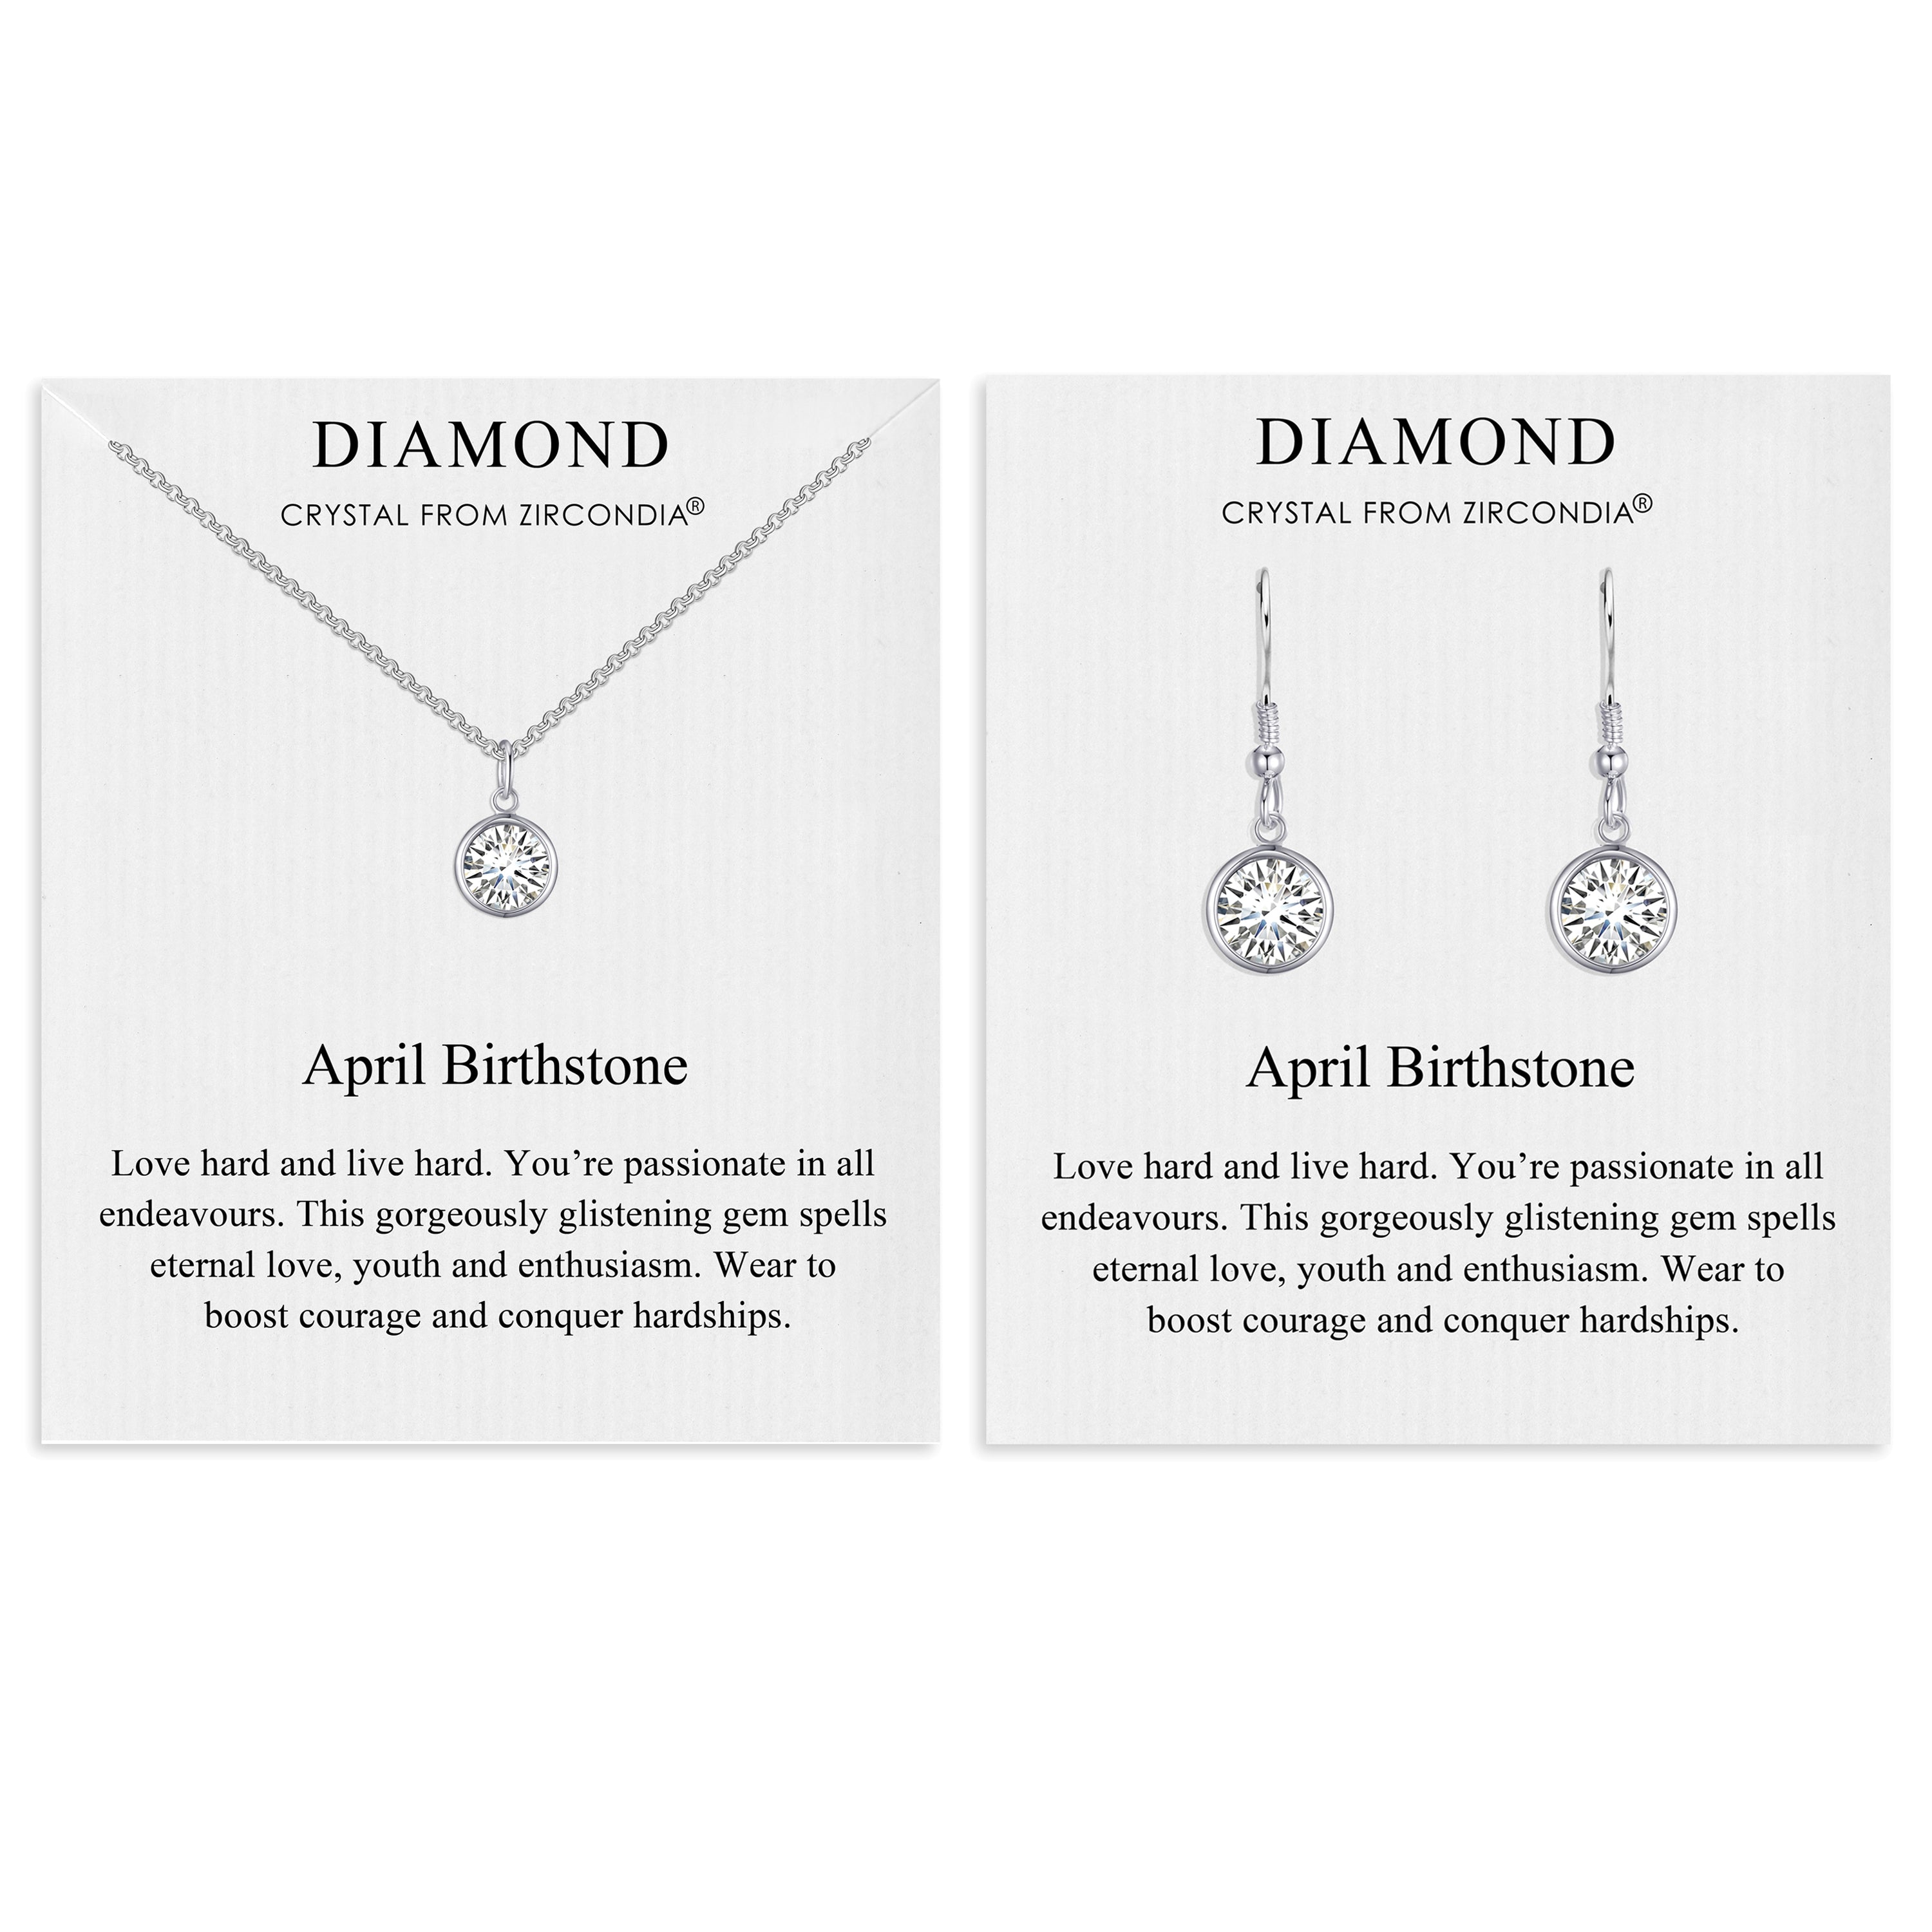 April (Diamond) Birthstone Necklace & Drop Earrings Set Created with Zircondia® Crystals by Philip Jones Jewellery